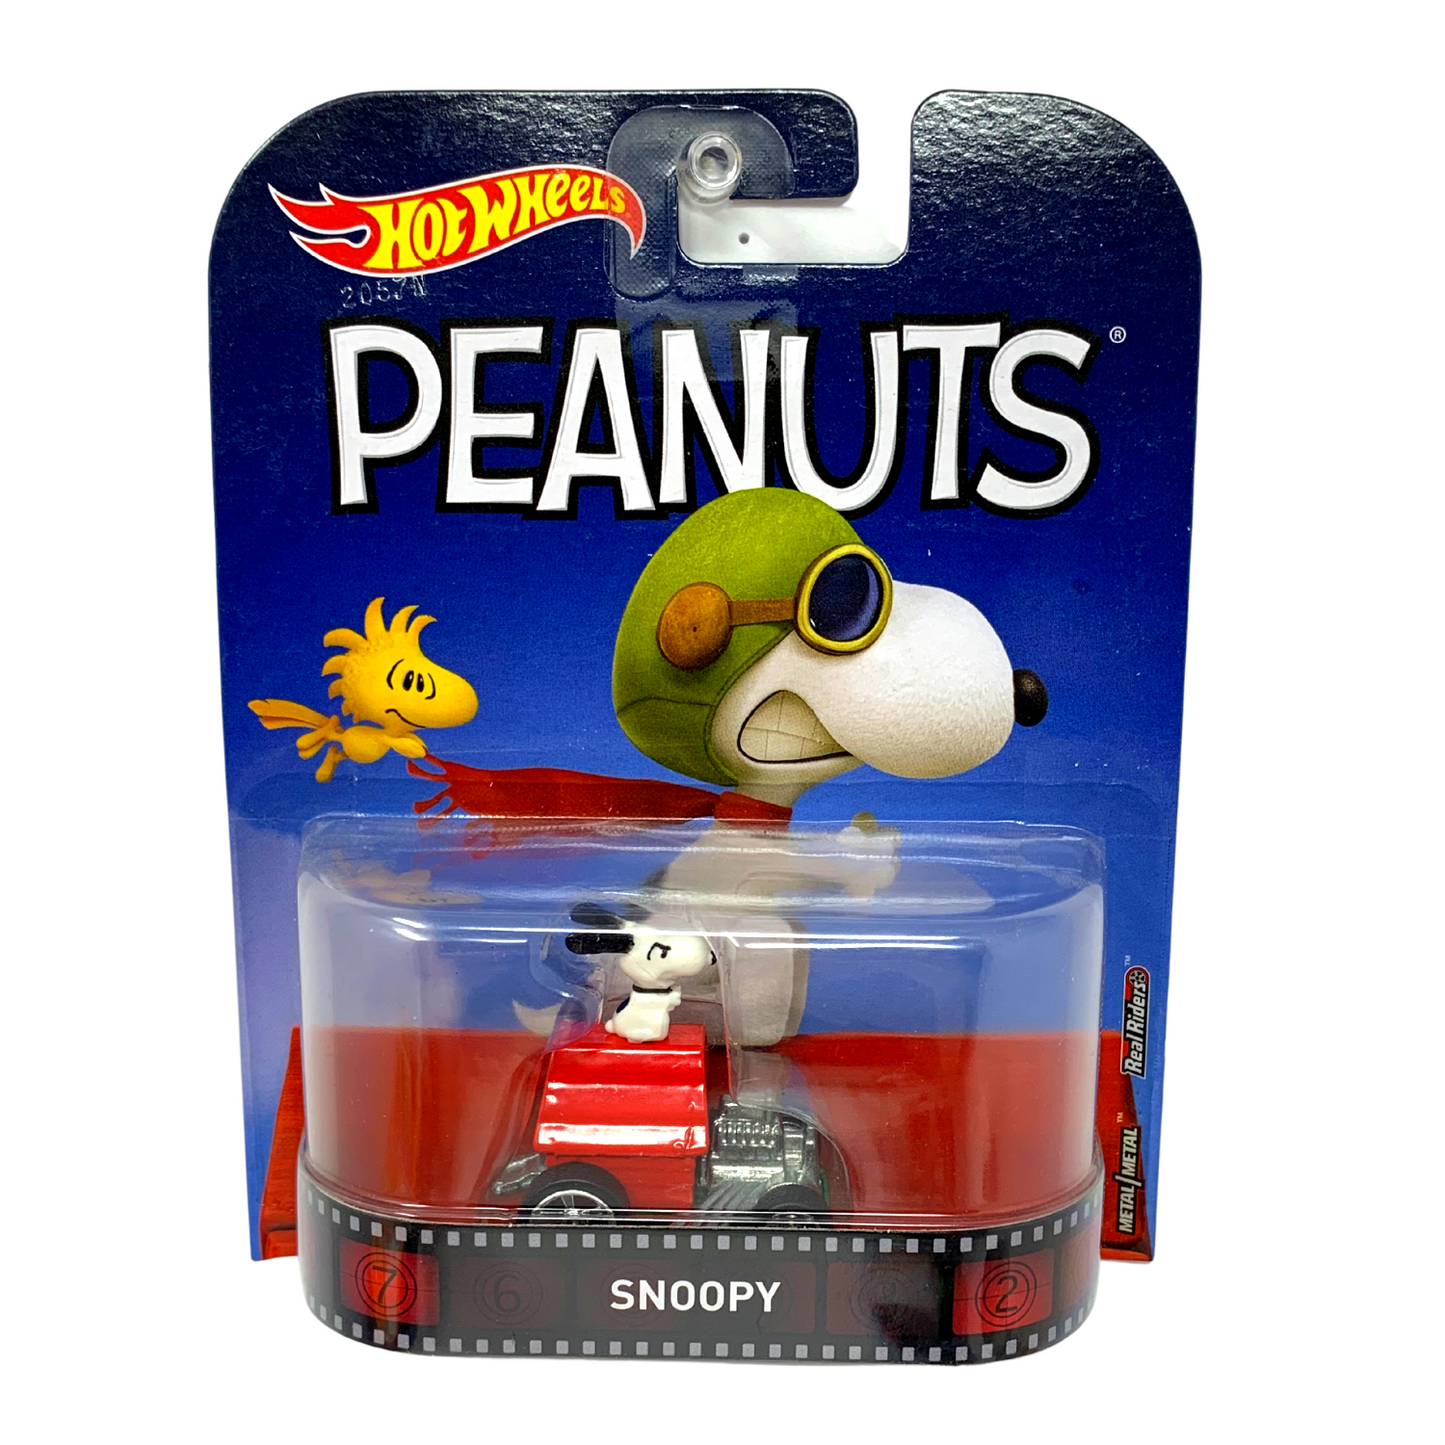 Hot Wheels Retro Entertainment Peanuts Snoopy 1:64 Diecast